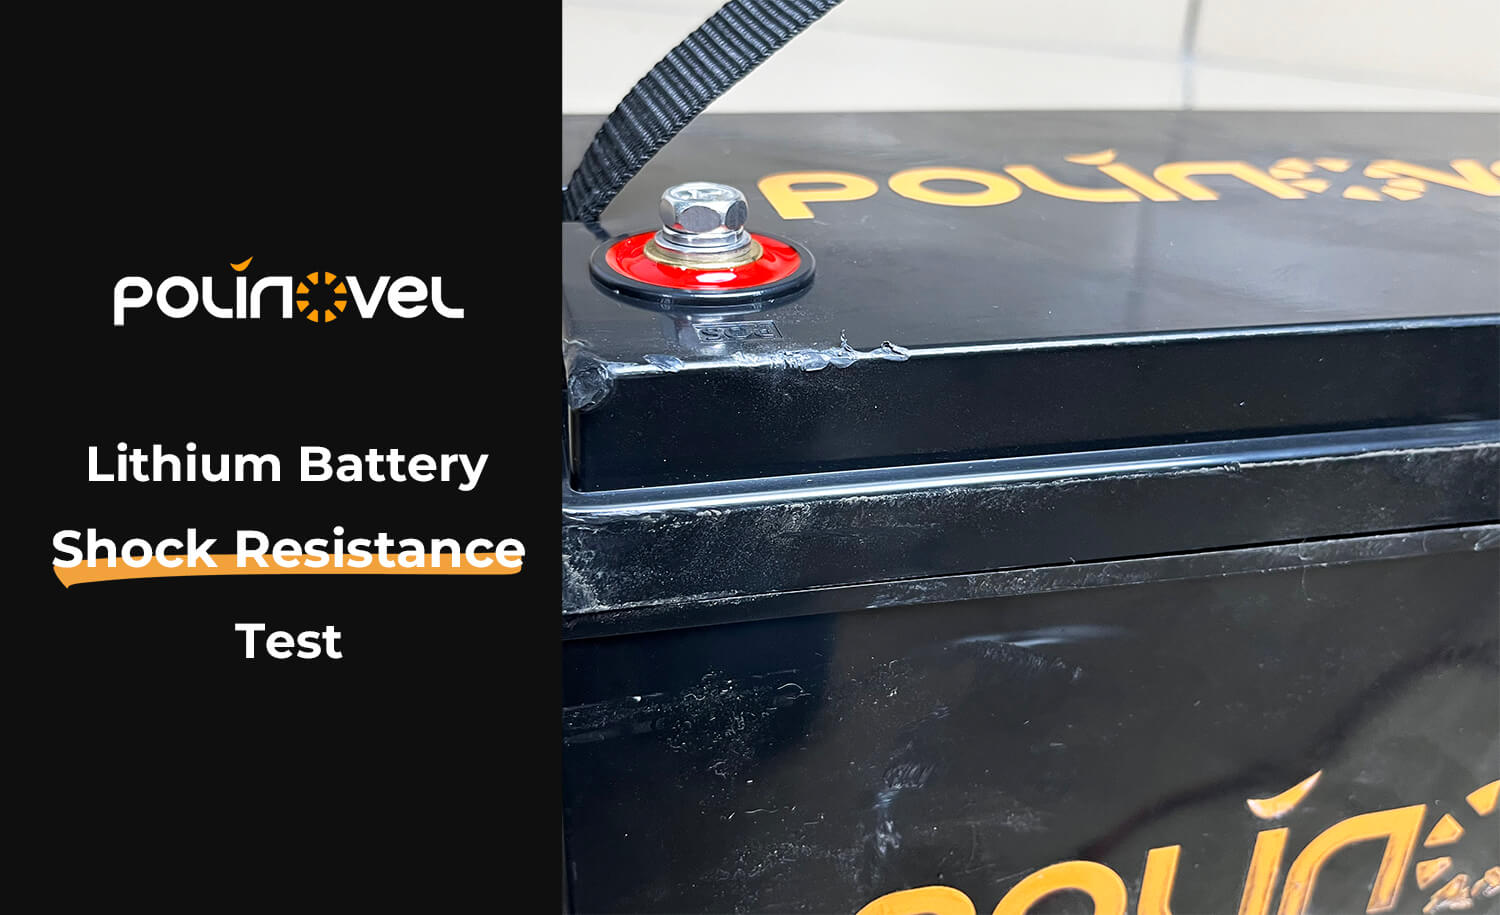 Polinovel Lithium Battery Shock Resistance Test